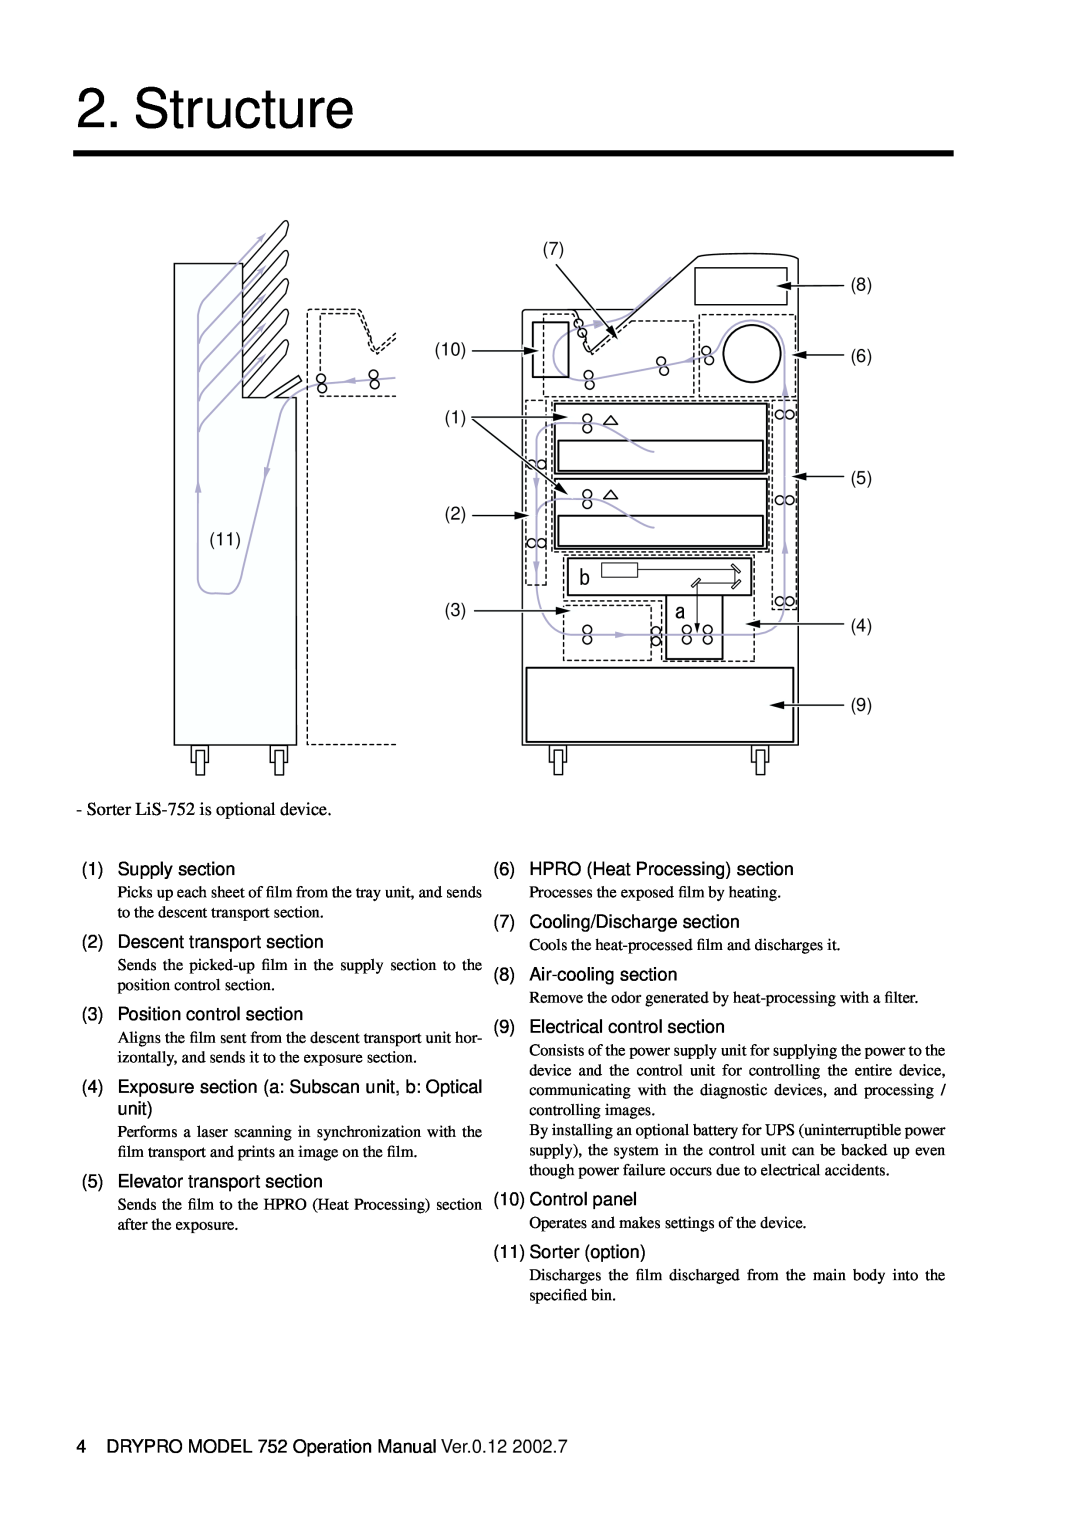 Konica Minolta 752 operation manual Structure 